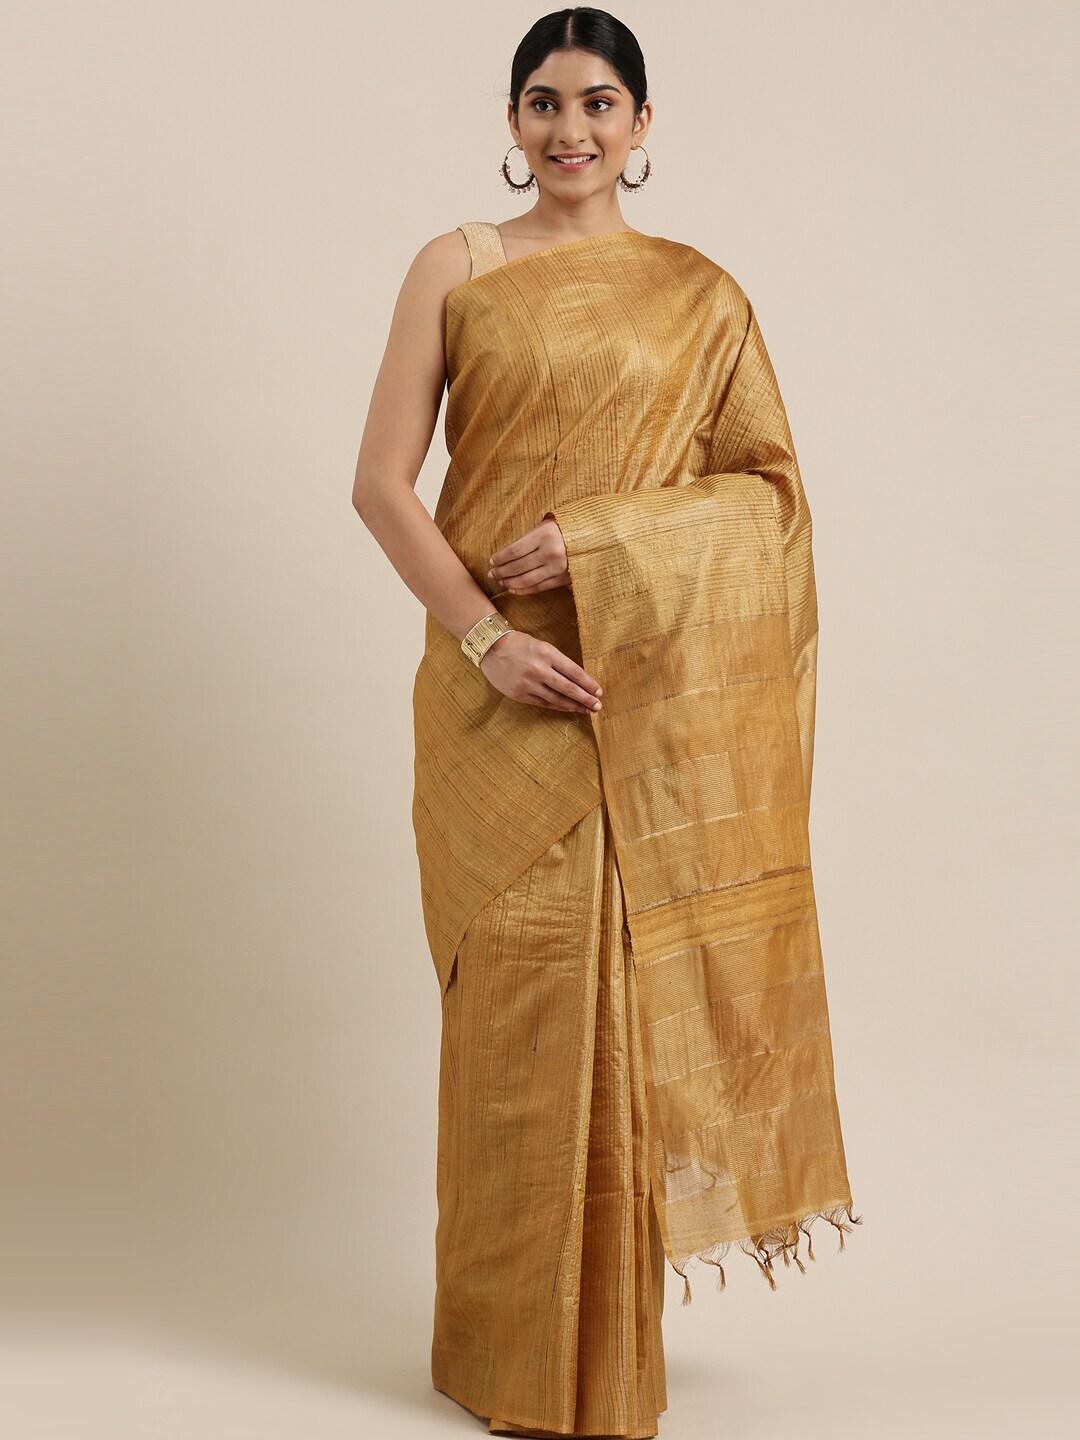 The Chennai Silks Golden Striped Saree